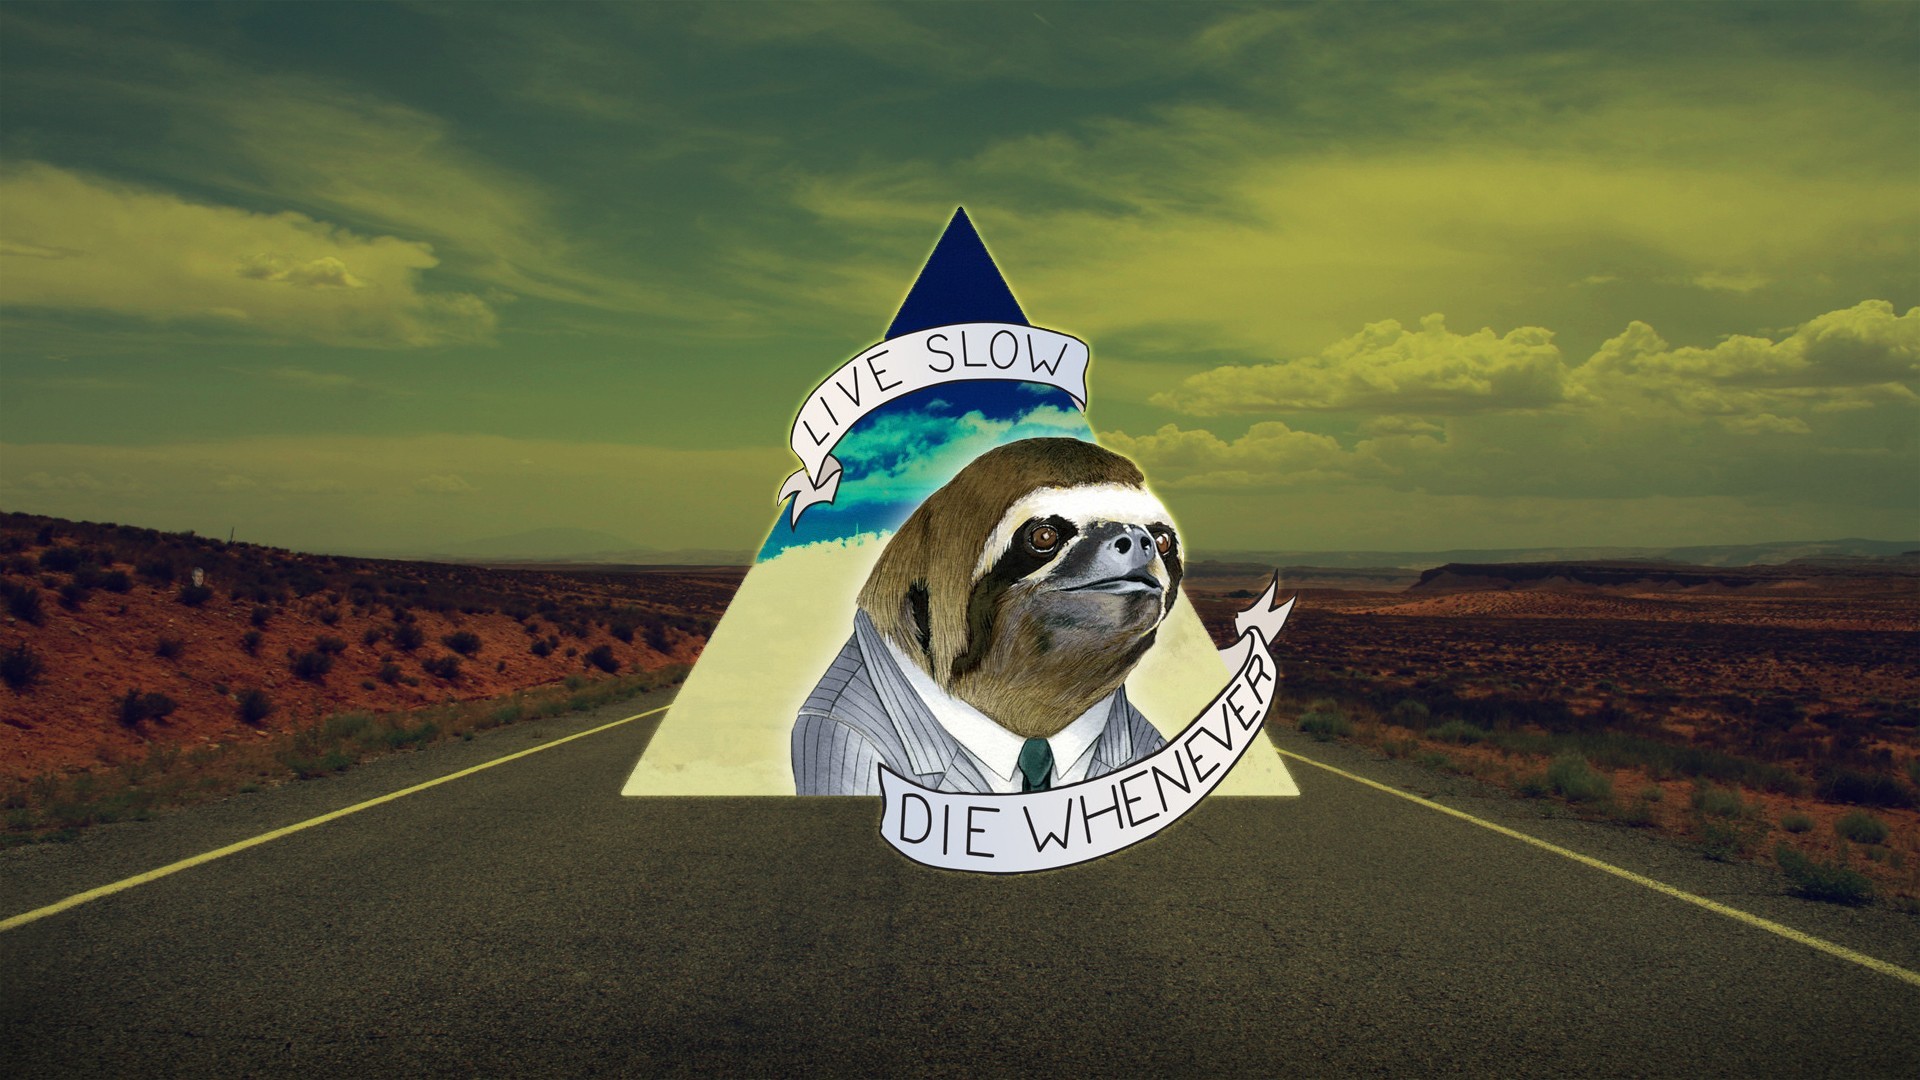 General 1920x1080 sloths humor road life death triangle quote animals asphalt